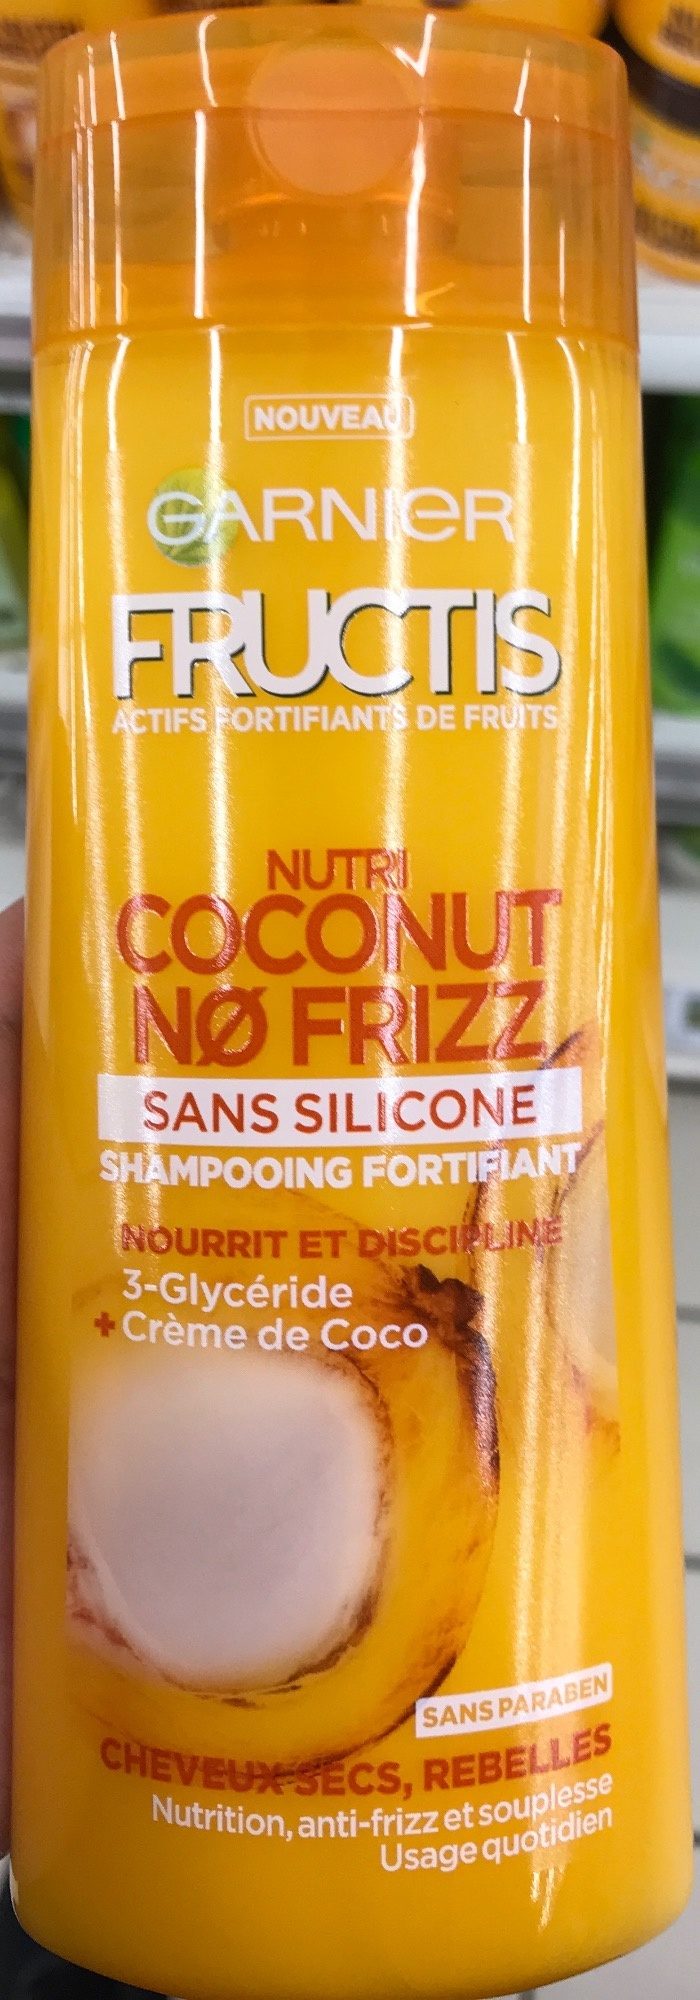 Fructis Nutri Coconut No Frizz - Produit - fr